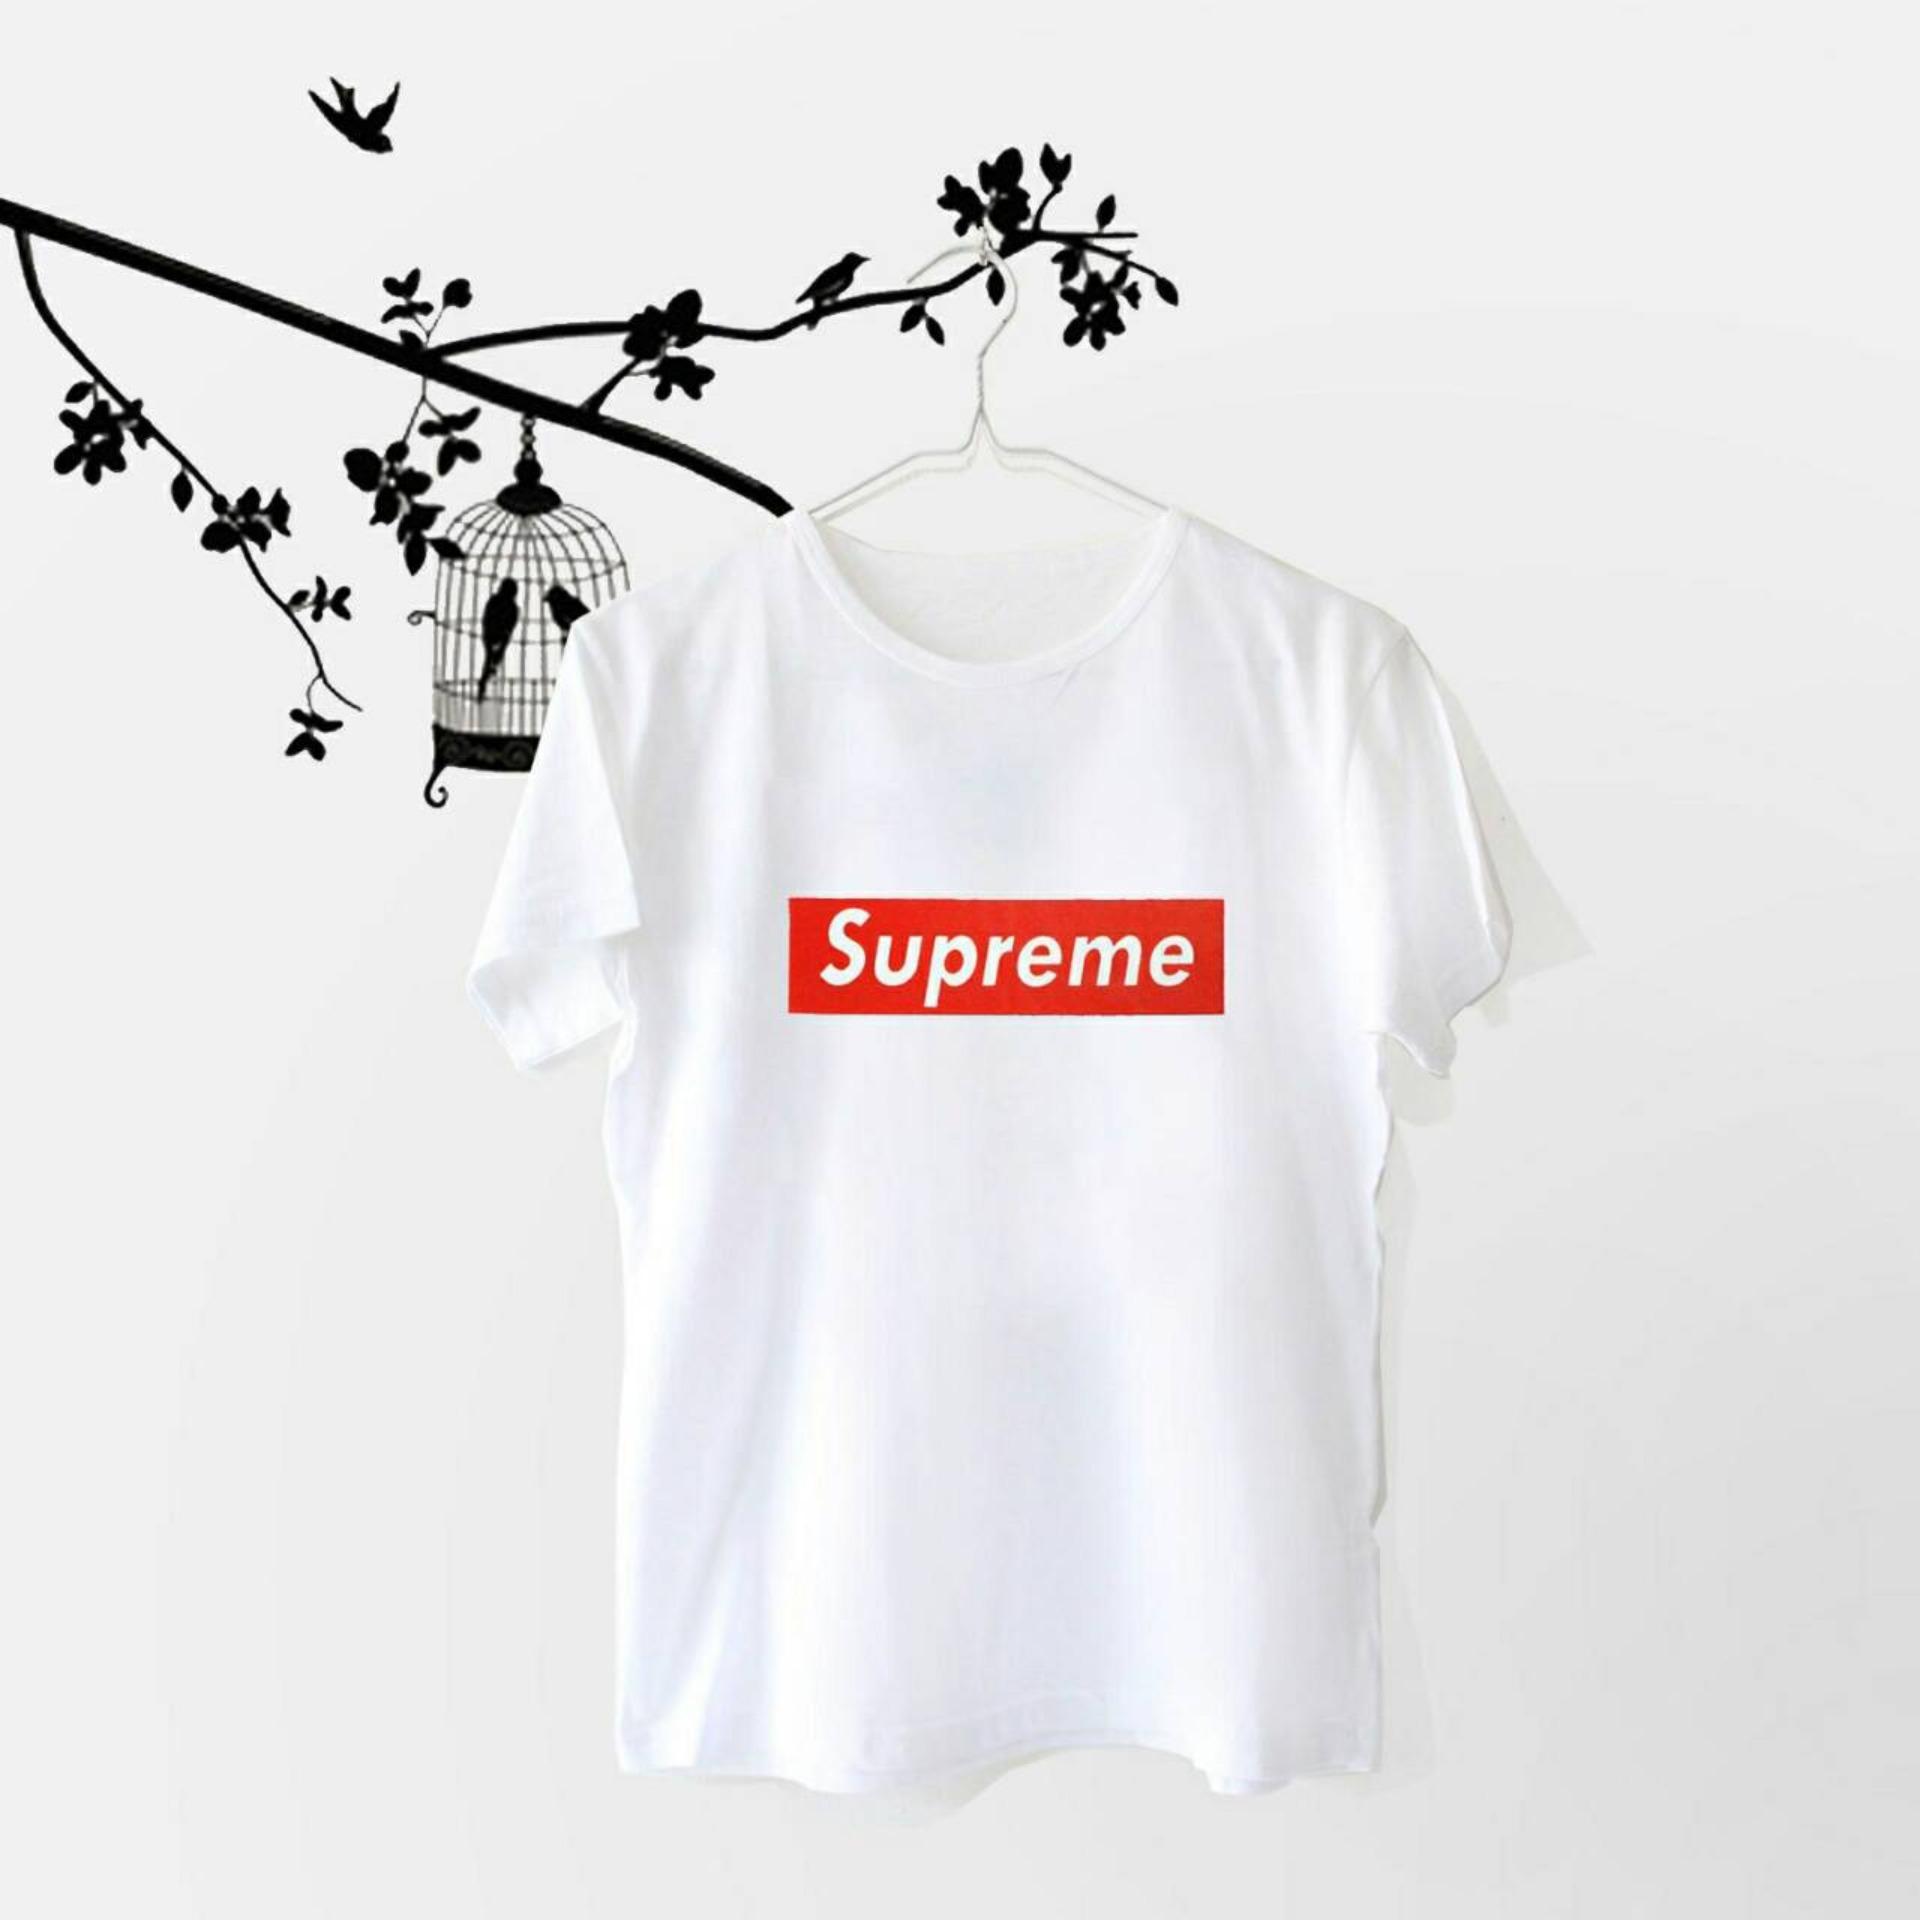 ELLIPSES.INC Tumblr  Tee / T-Shirt / Kaos Wanita Supreme - Putih